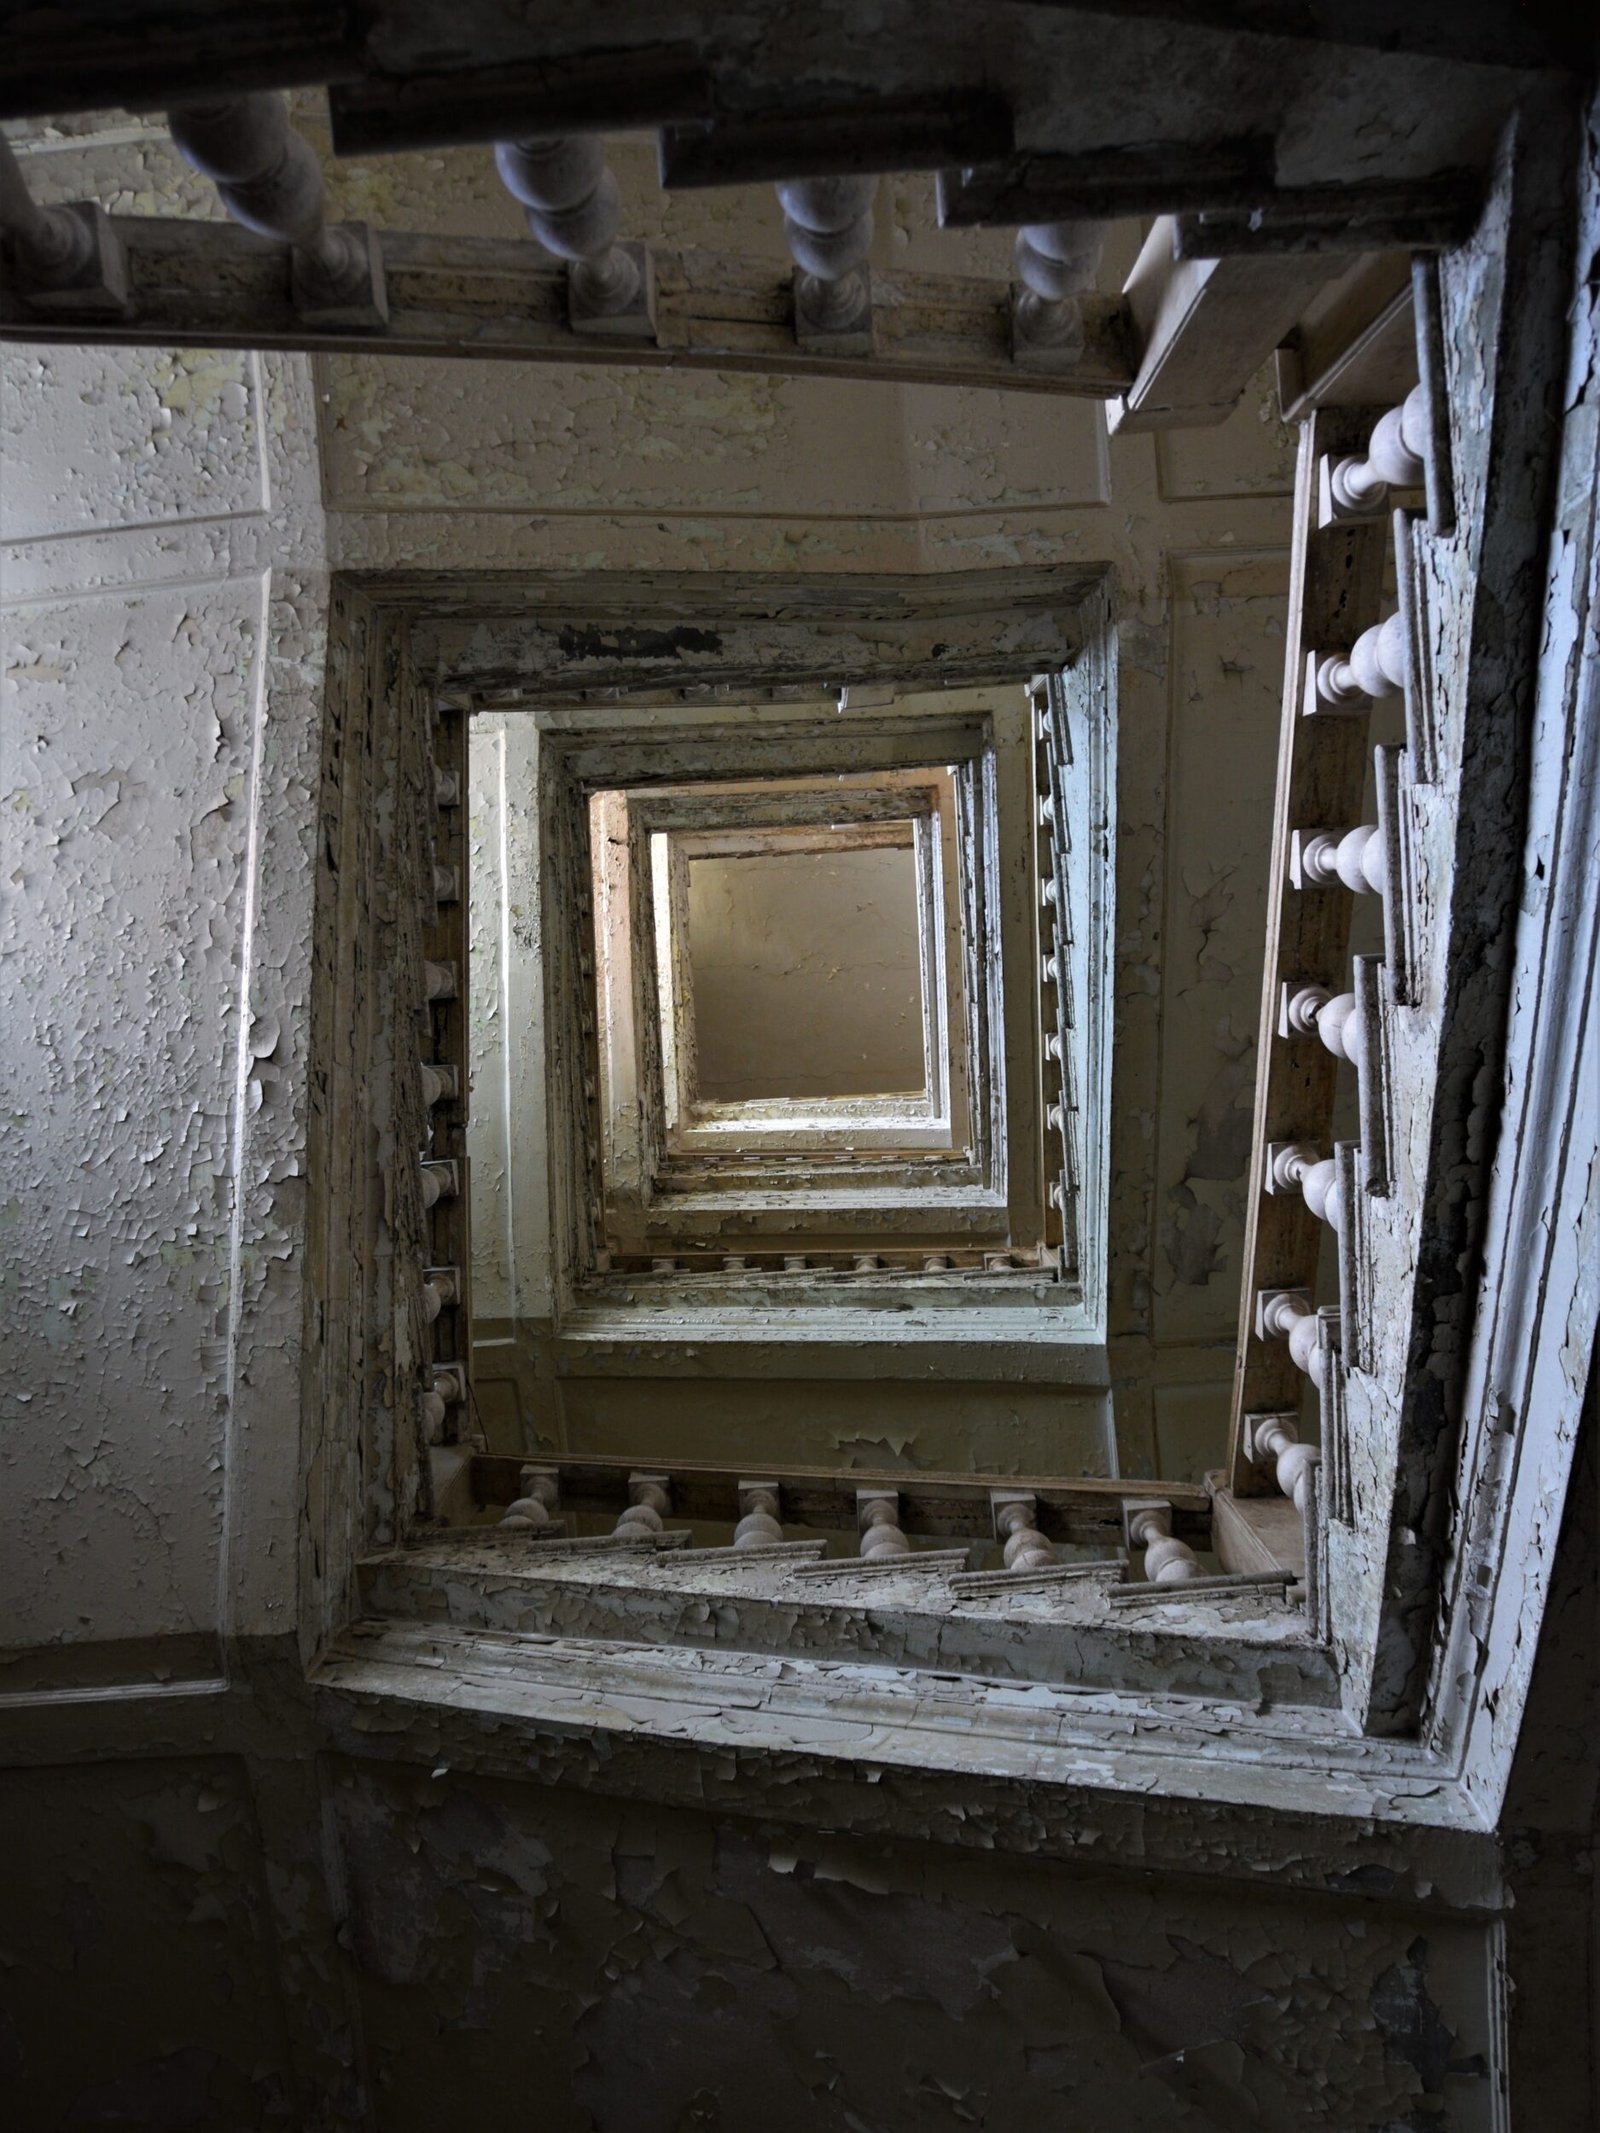 a spiraling staircase seen from below